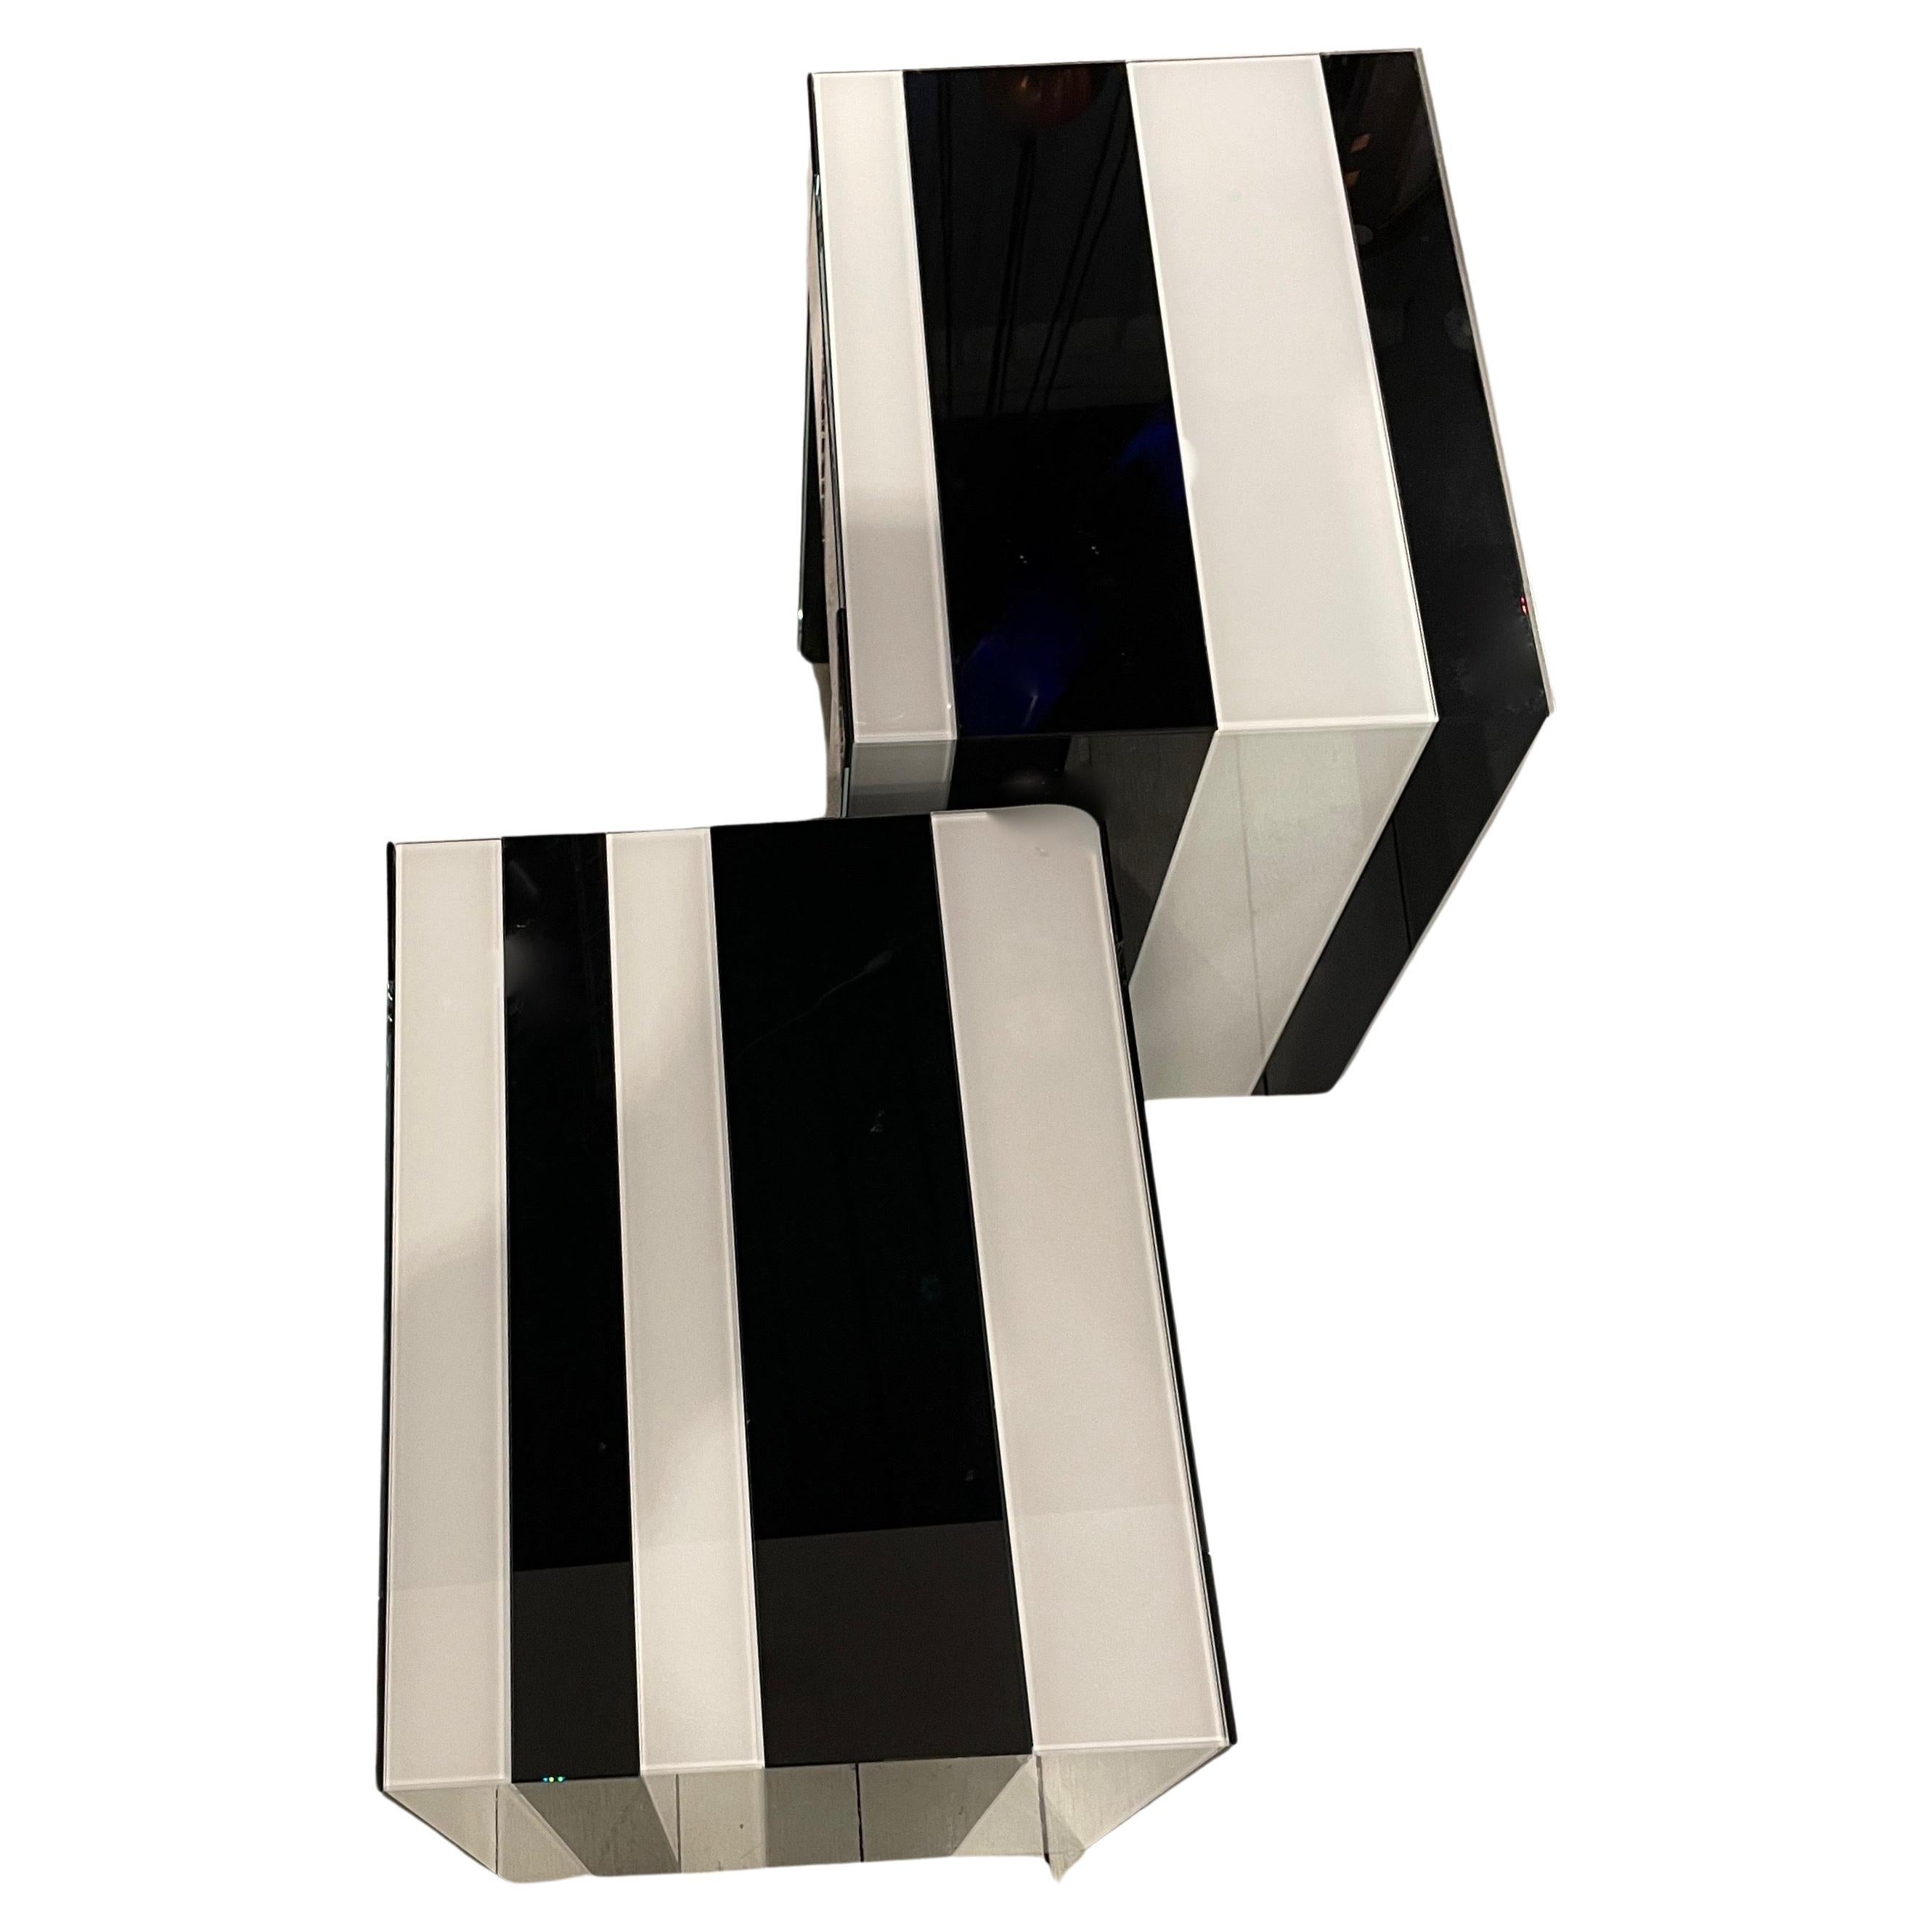 Black and White Opaline  Asymmetric Side Tables in the spirit of Daniel Buren.